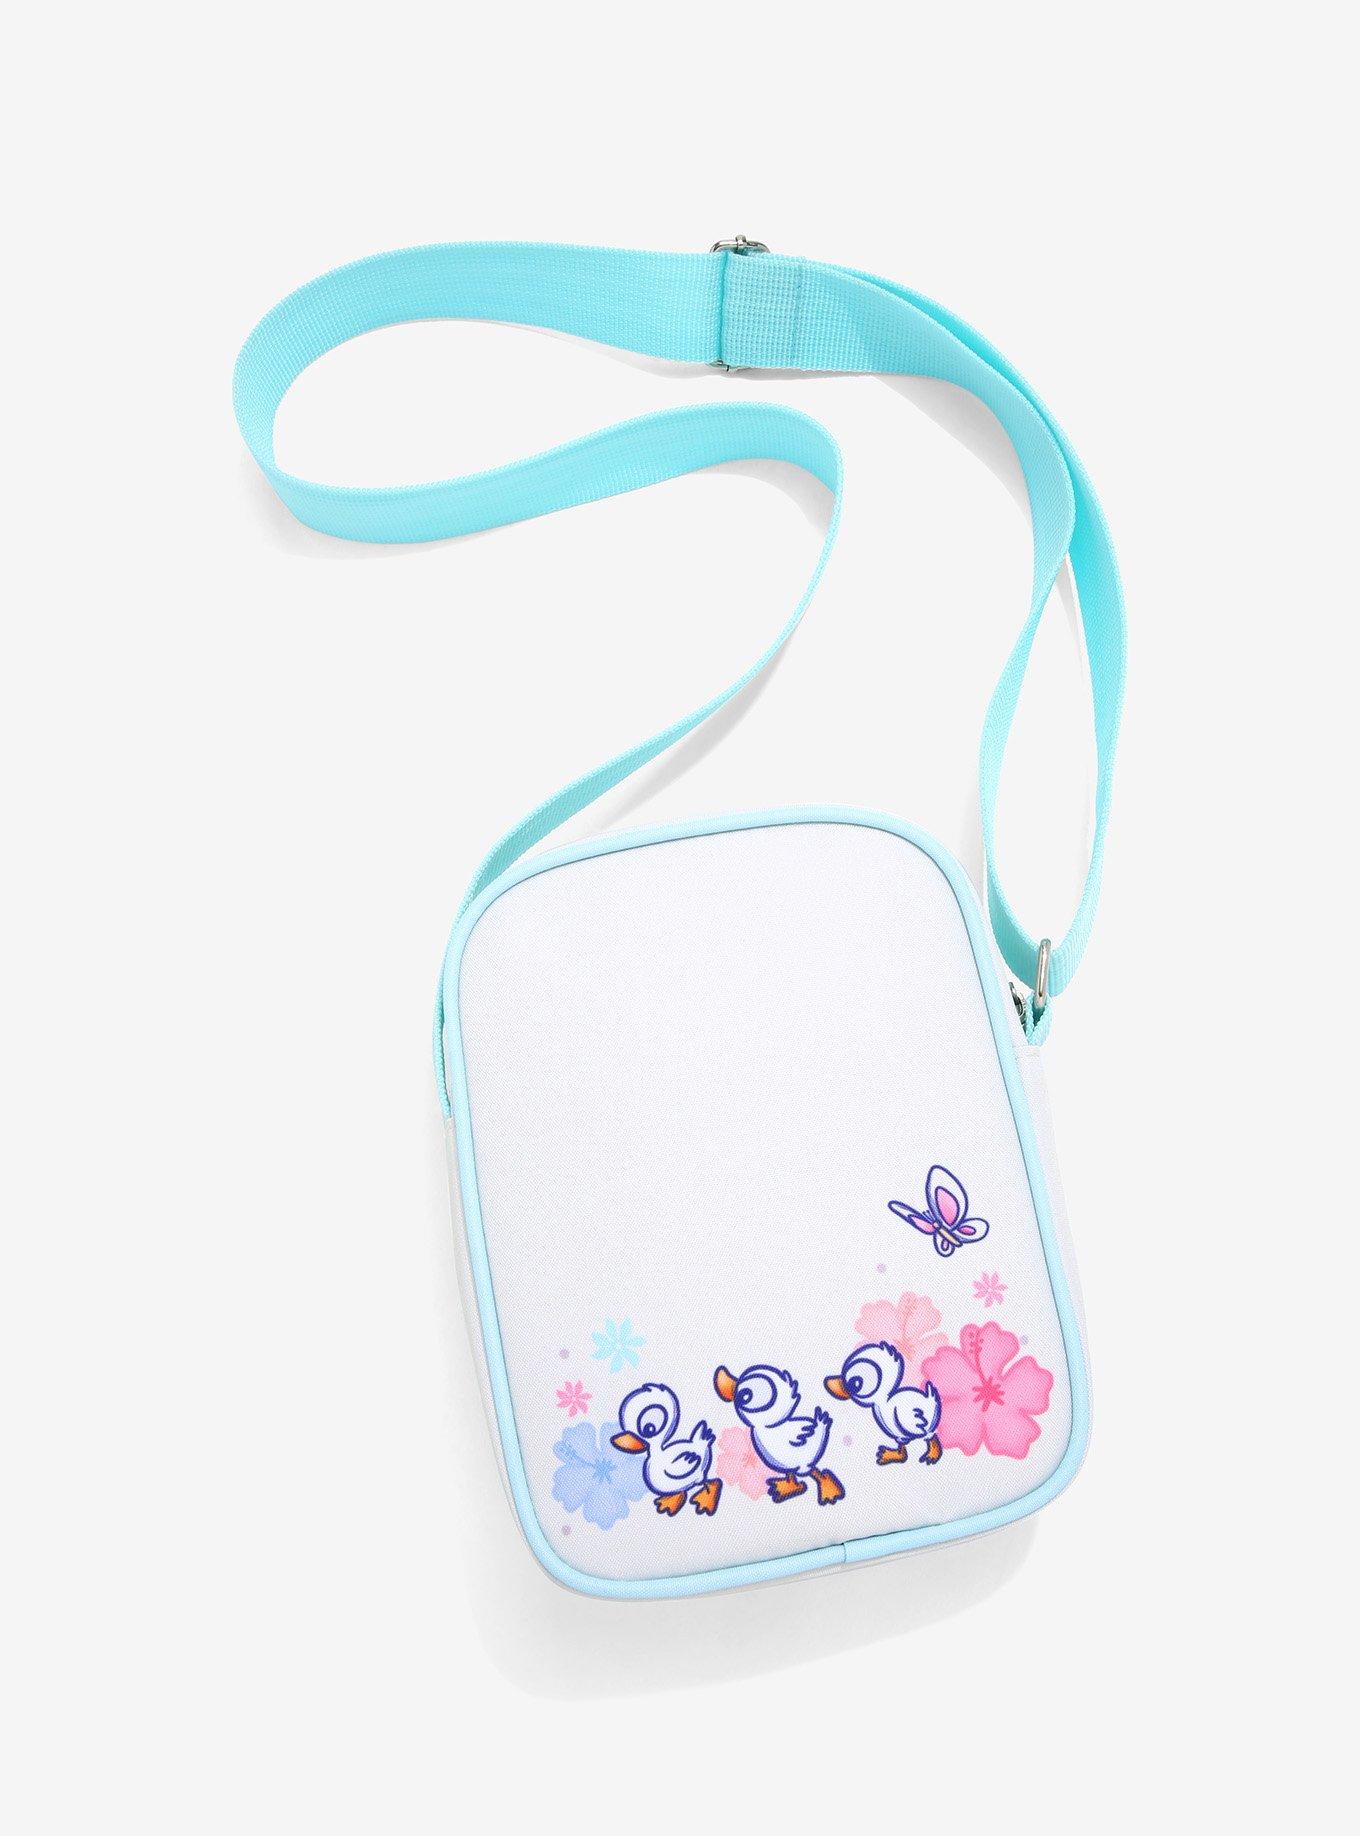 Loungefly Disney Lilo and Stitch Duckies Cosplay Crossbody Bag